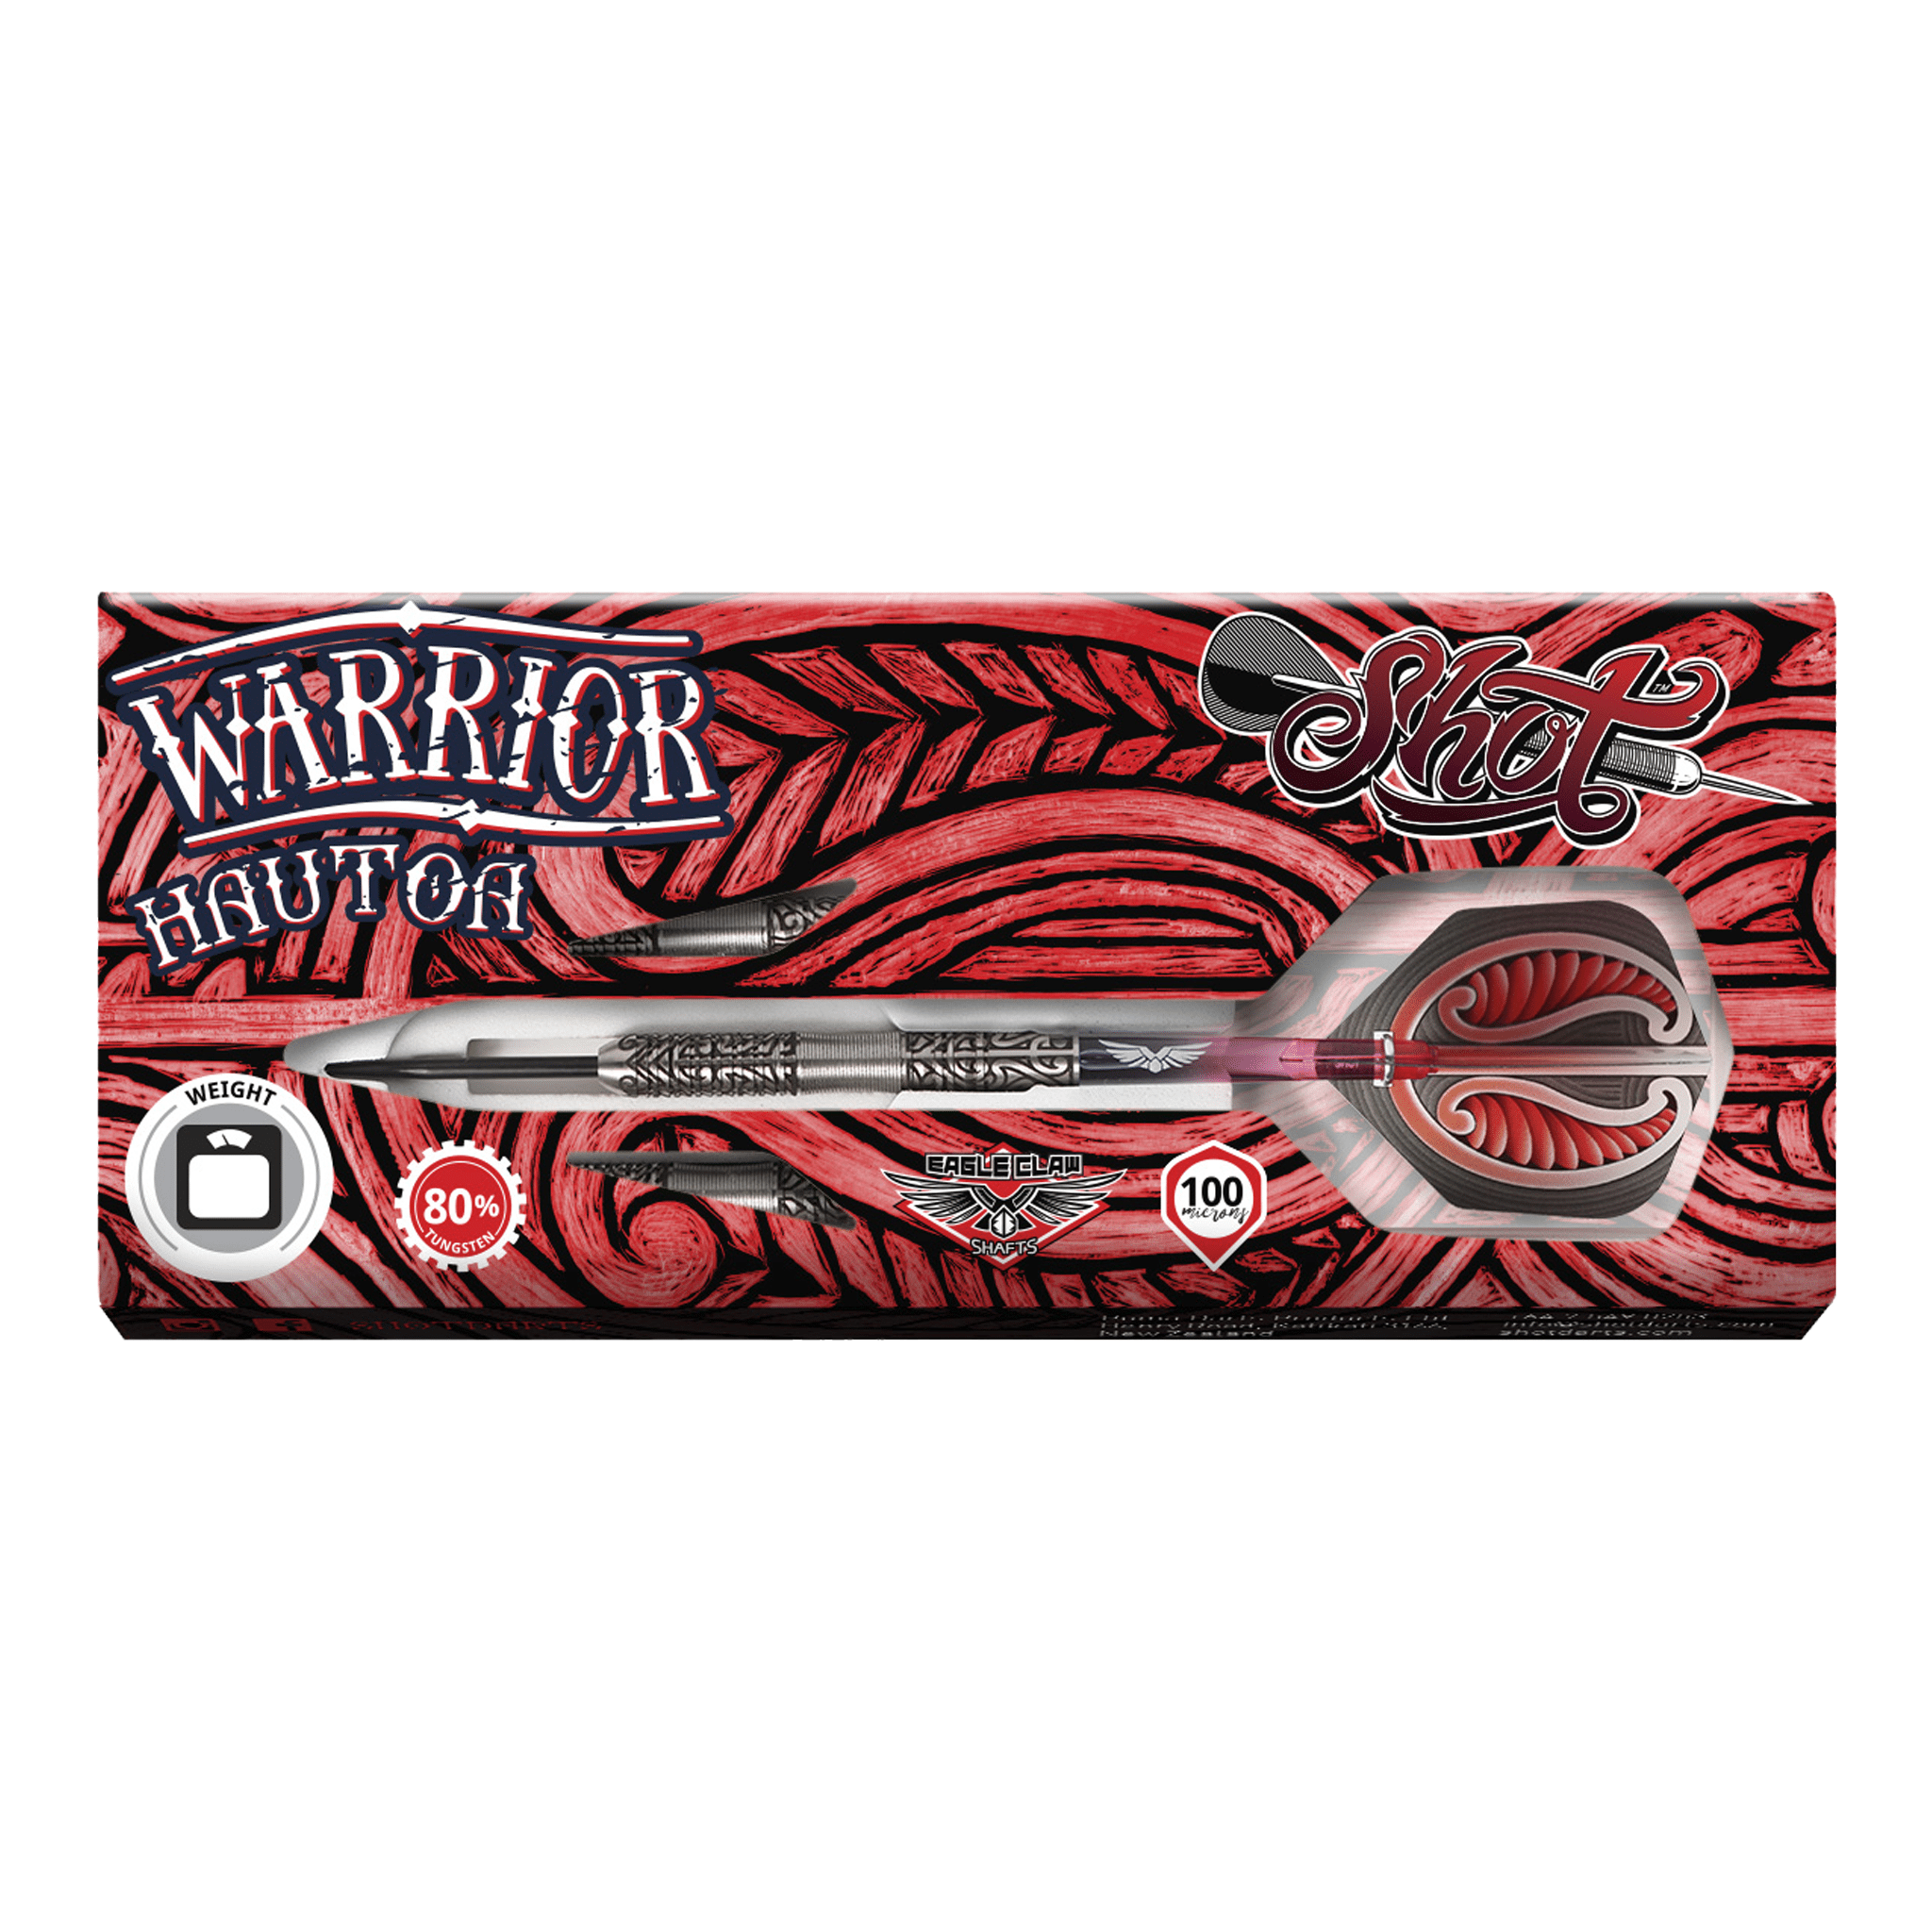 Shot Warrior Hautoa Steel Tip Darts - 80% Tungsten - 22 Grams Darts